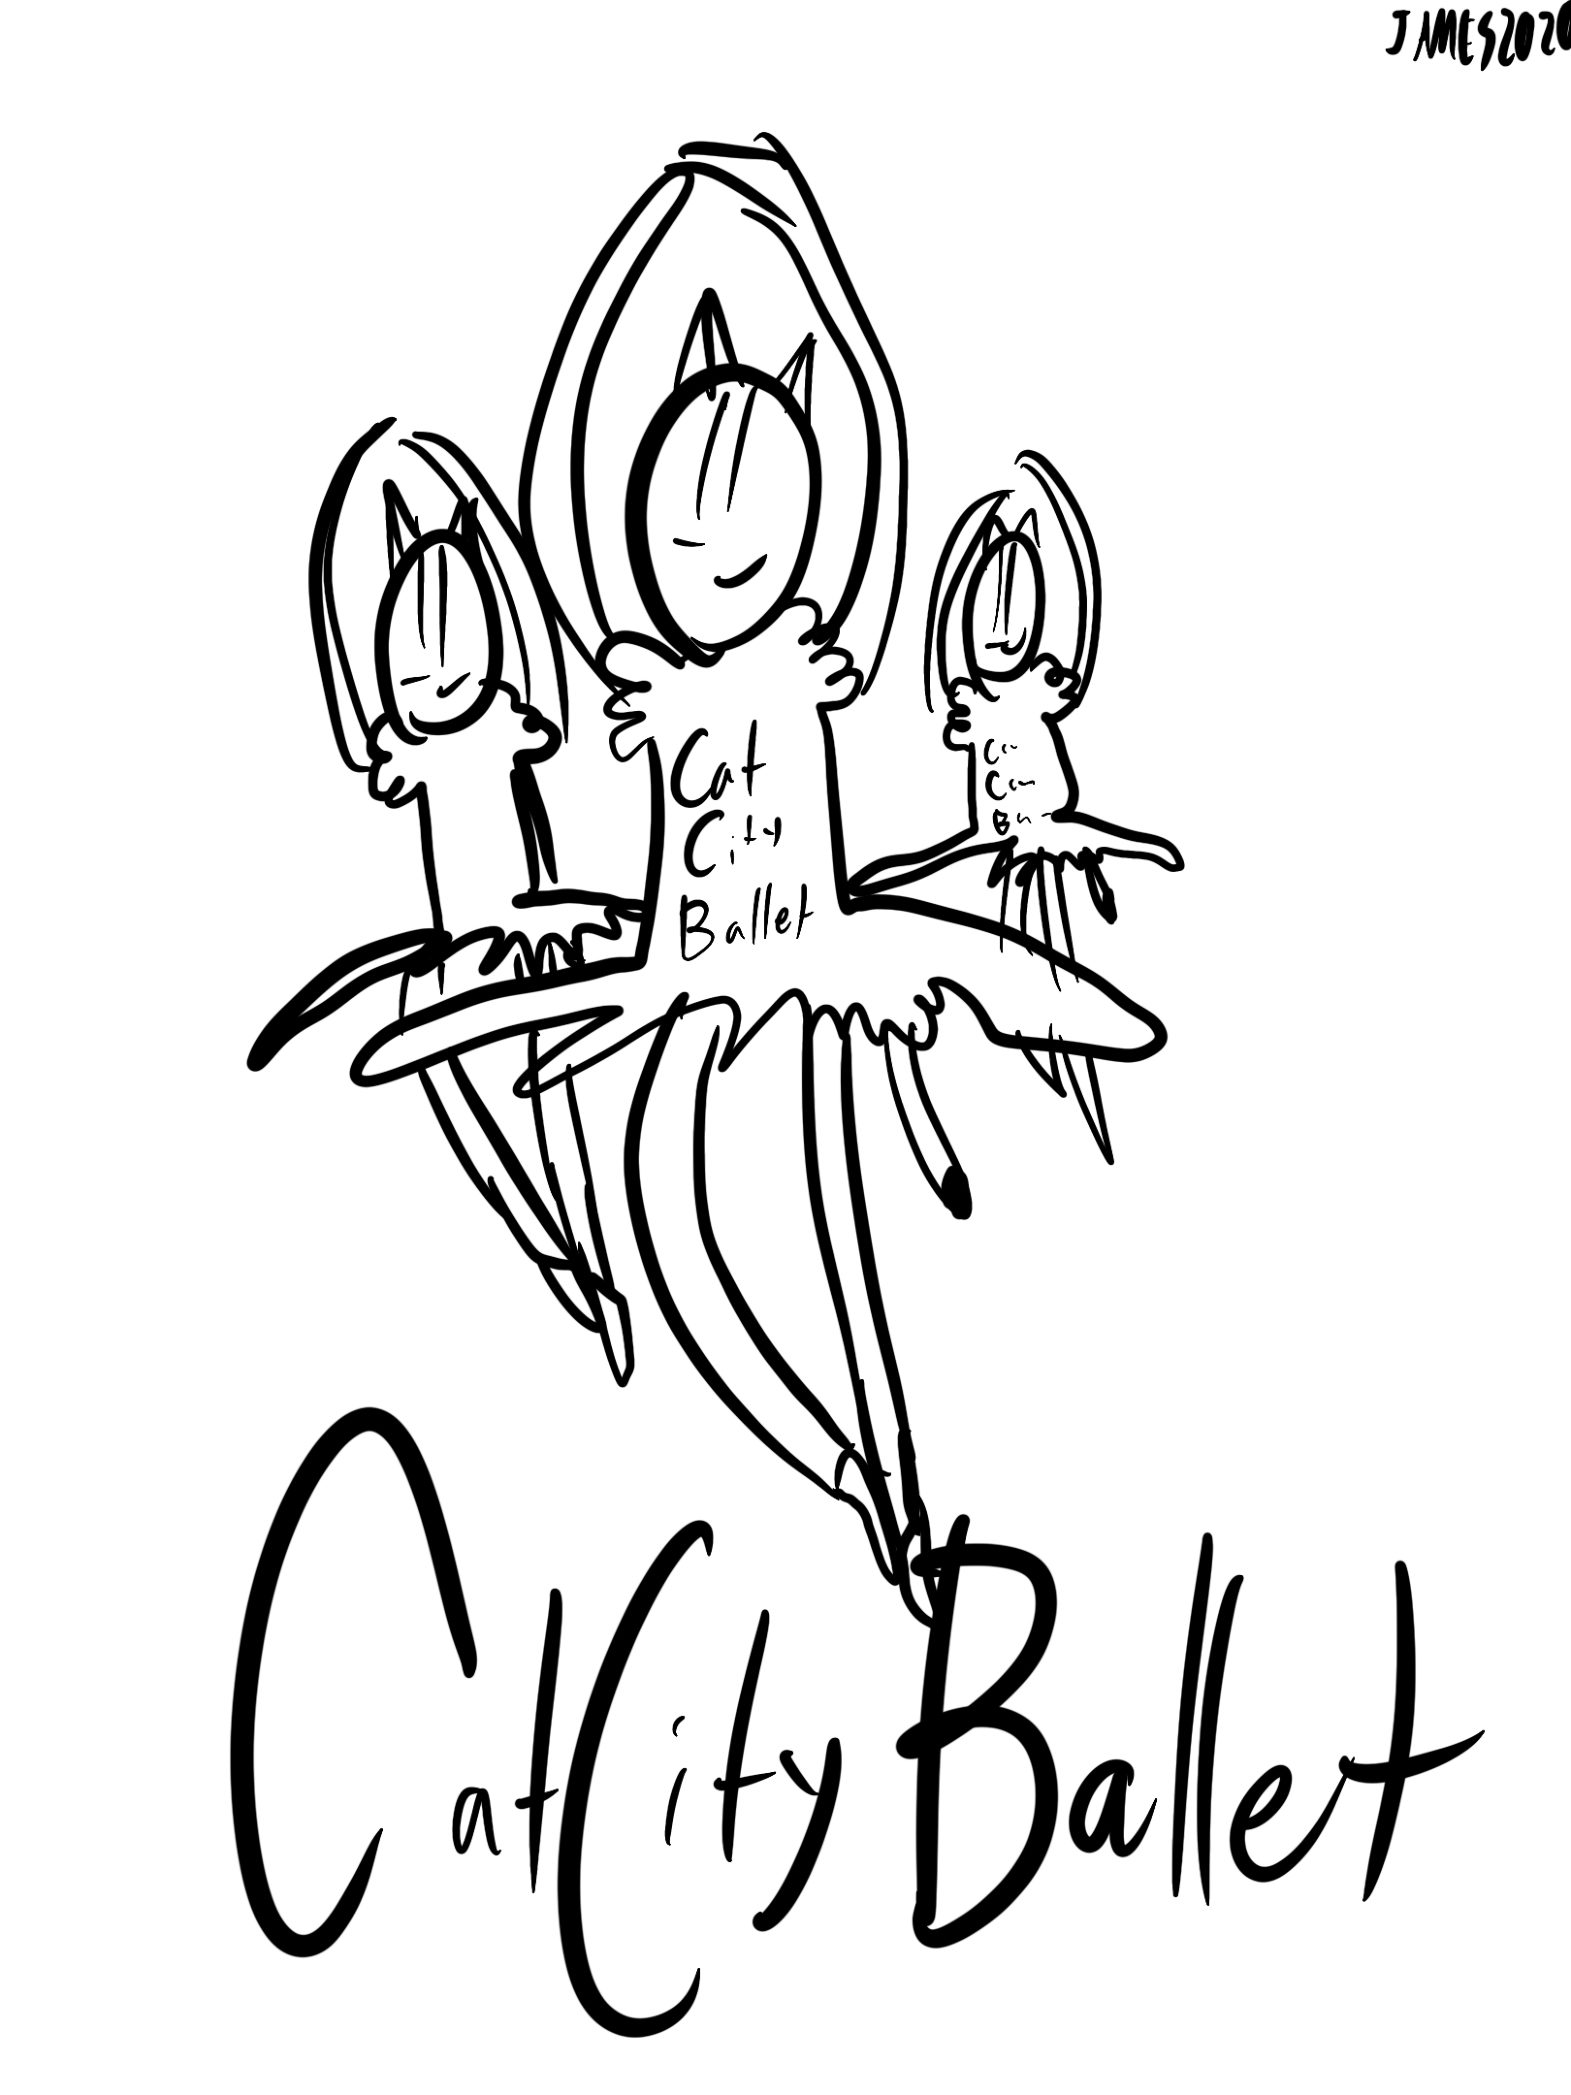 Cat City ballet